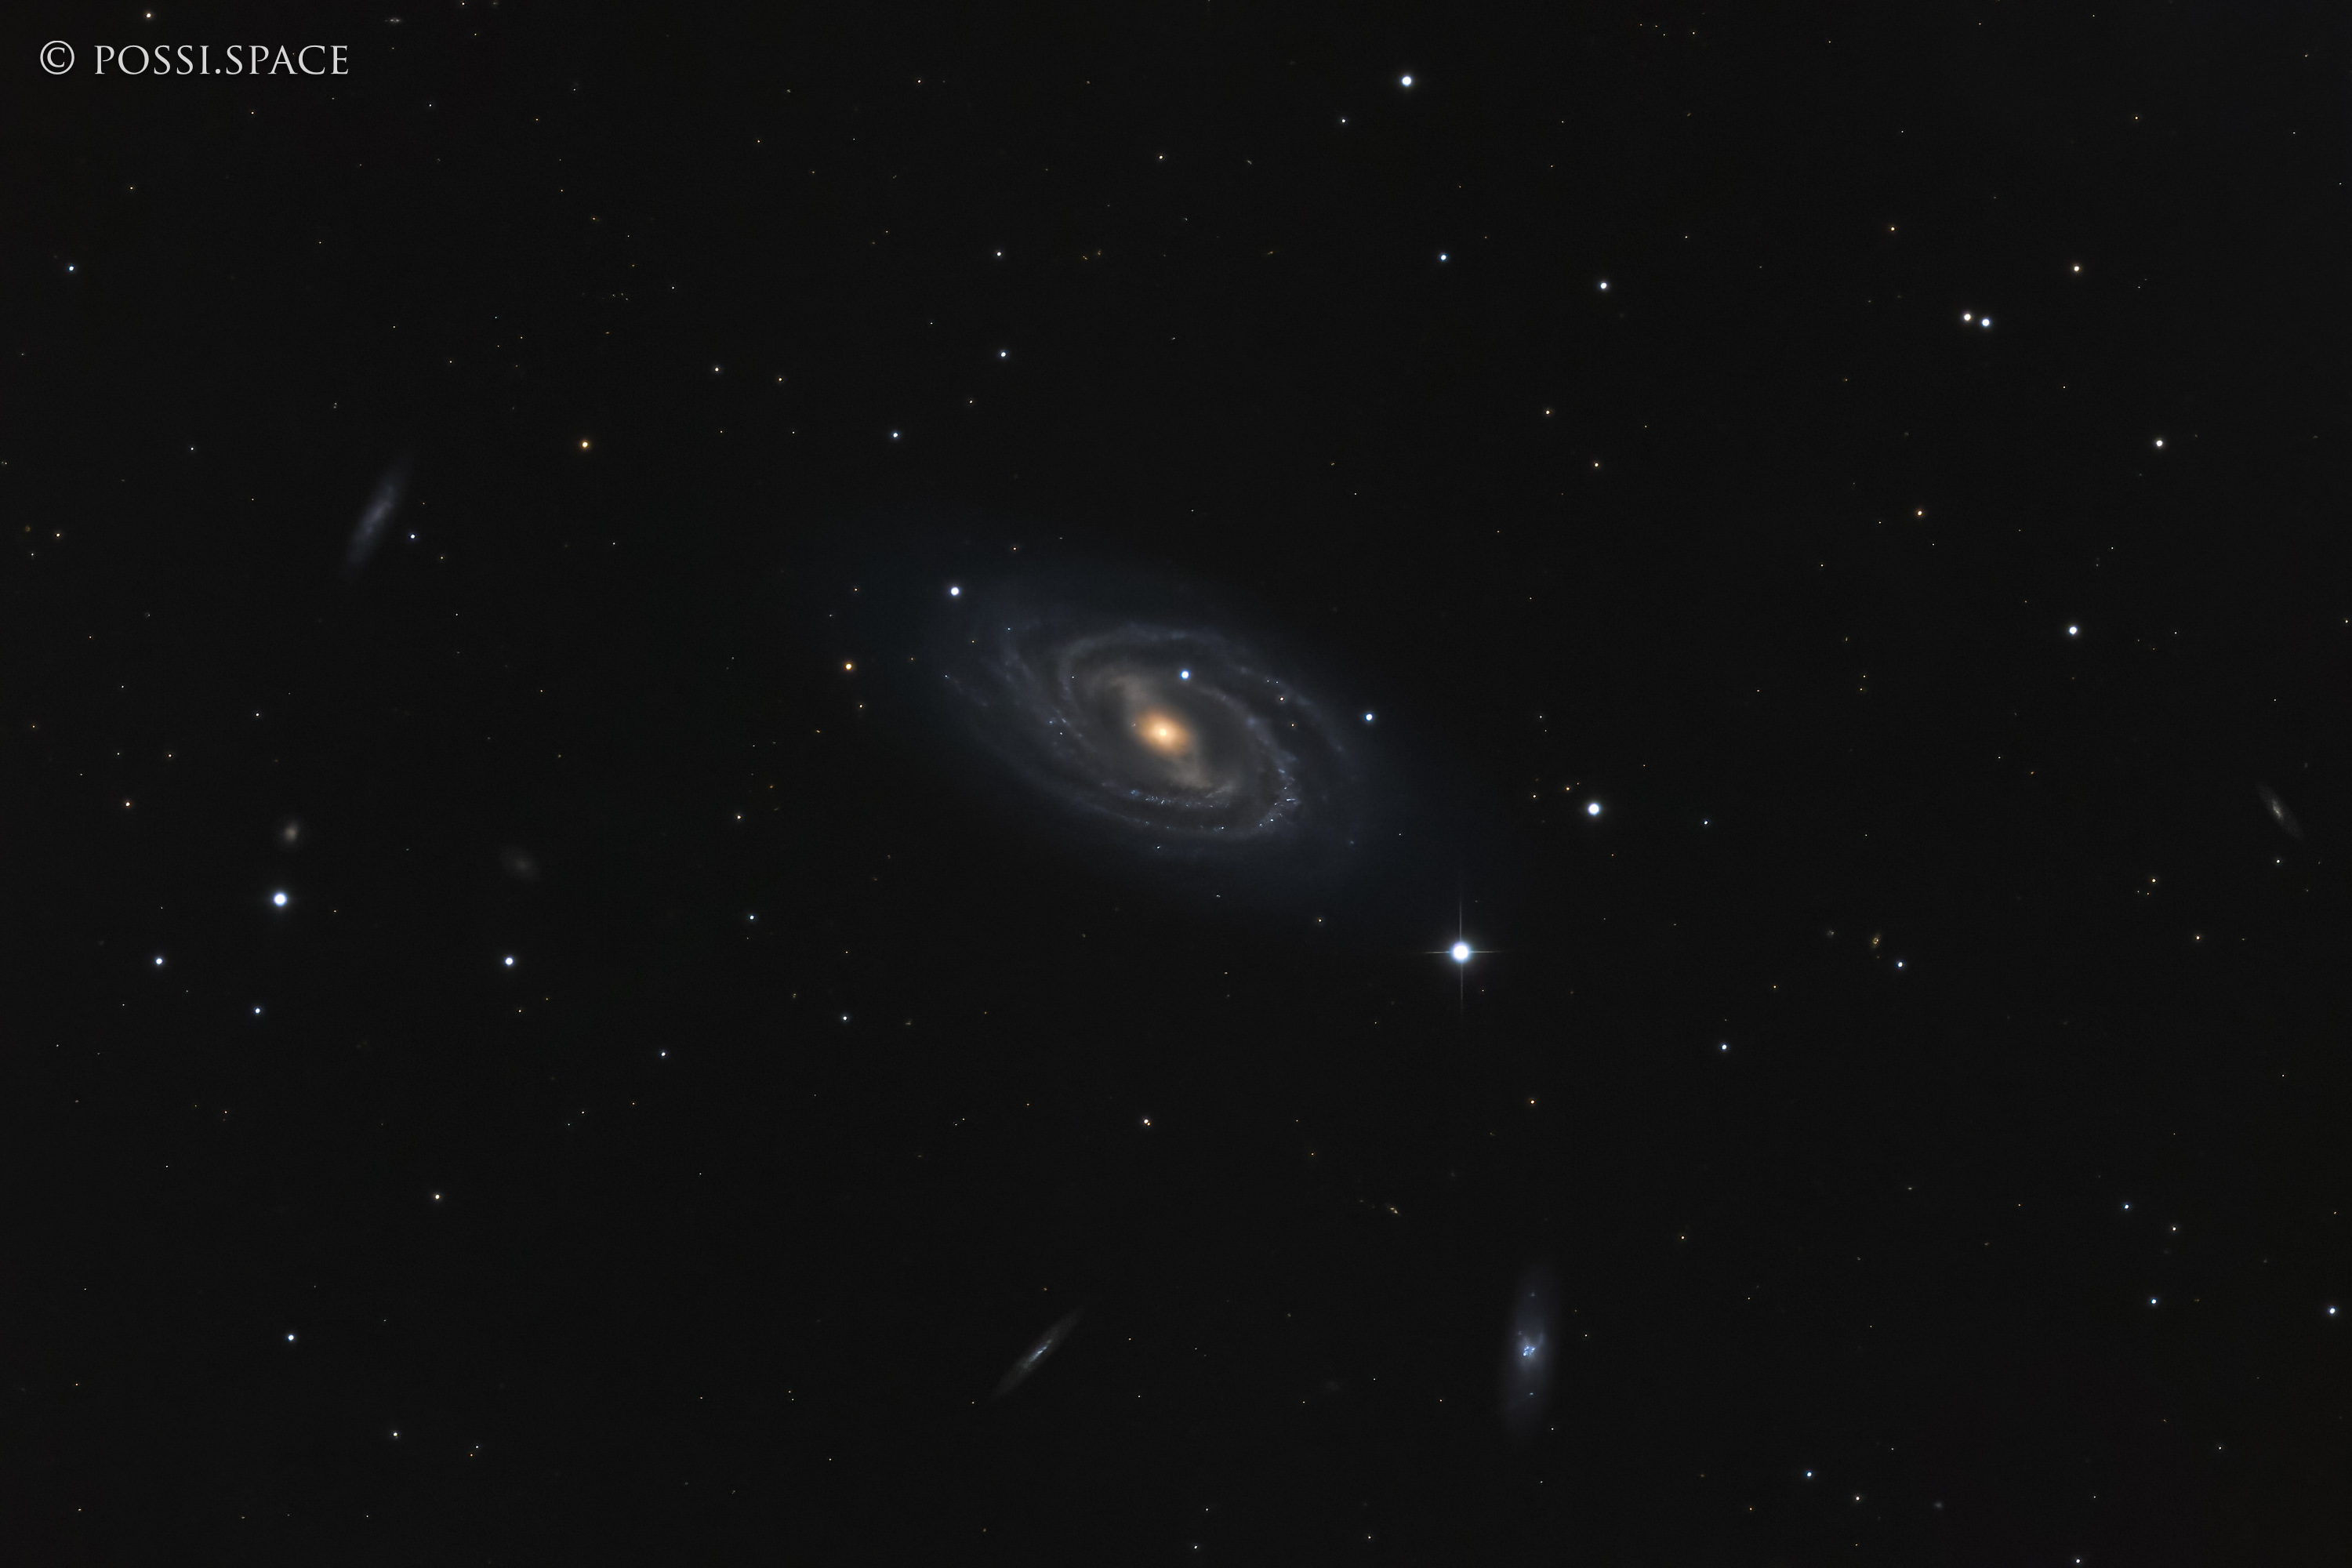 230430_m109_barred_spiral_galaxy_-_cdk17_nativ_lrgb.jpg